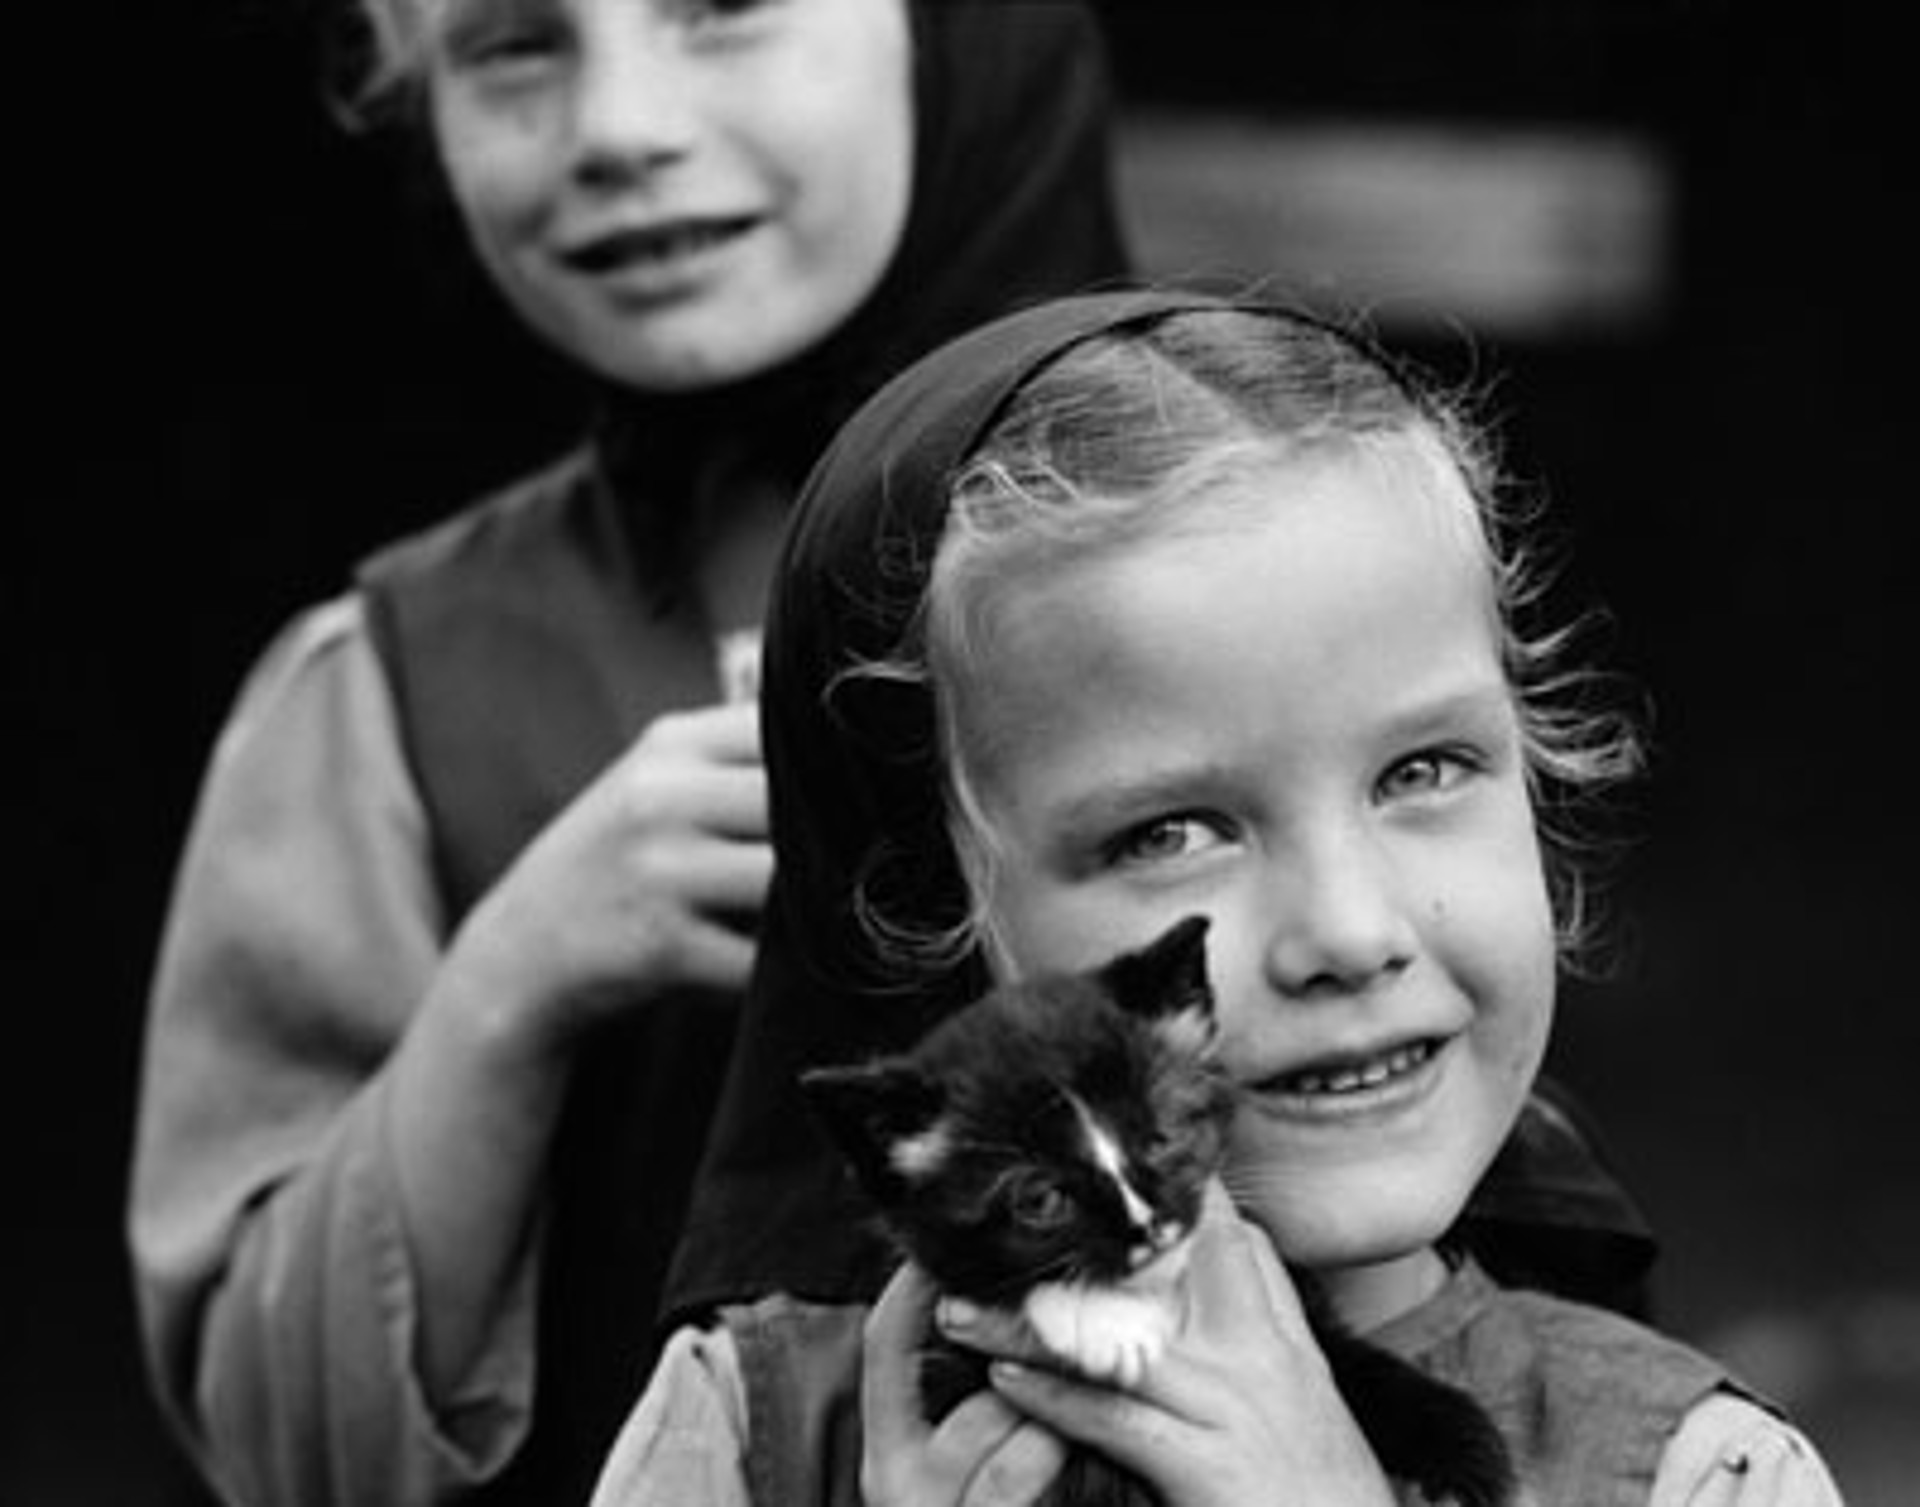 Mennonite Girl with Kitten by Don Dudenbostel